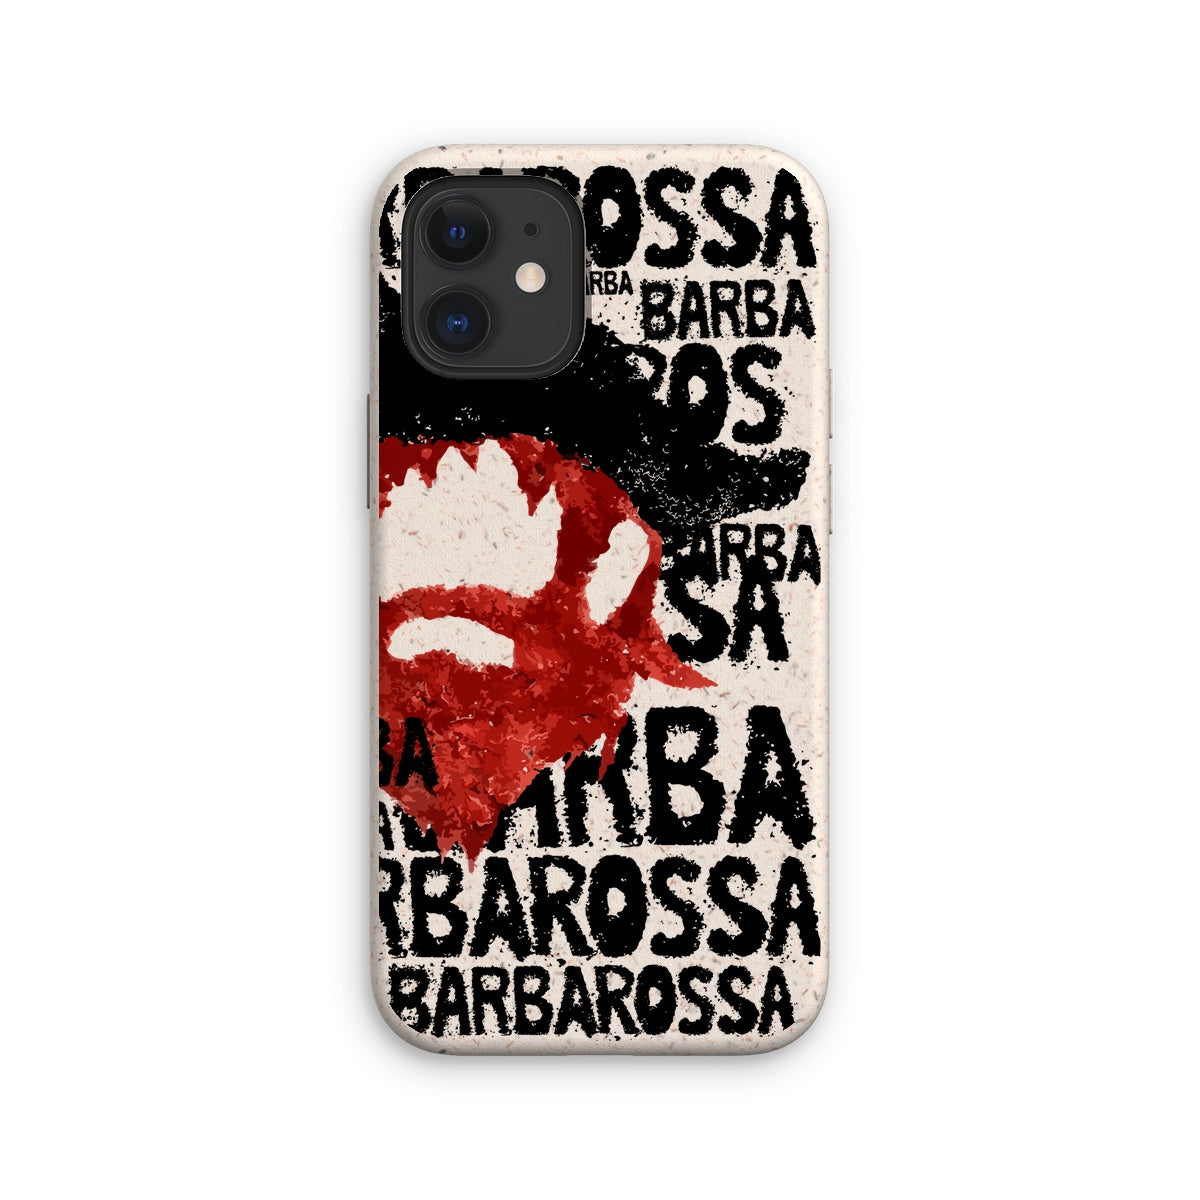 AQUA HMP2 - 01 - Barbarossa - Capa Eco Phone